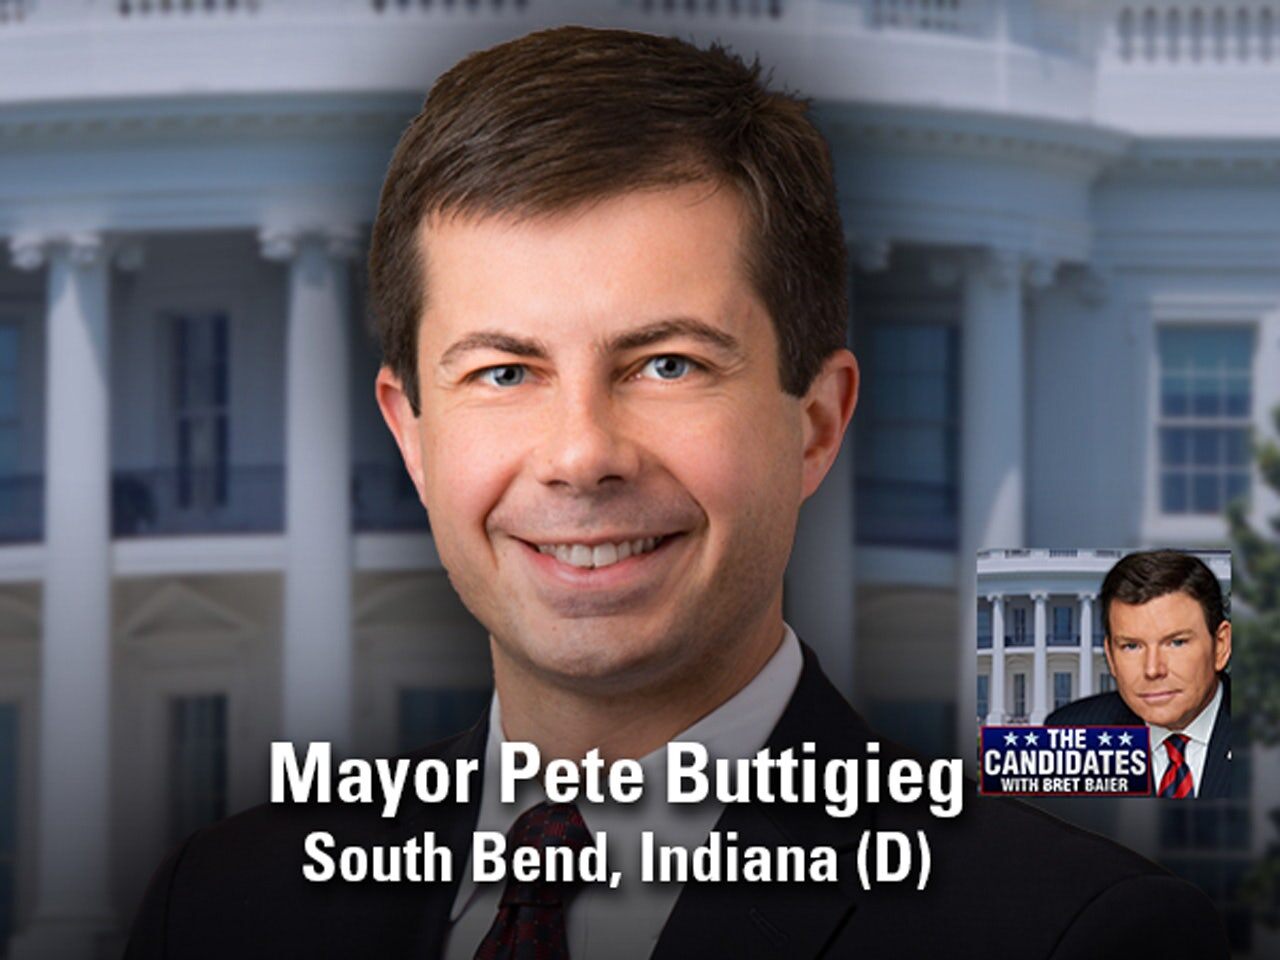 Pete Buttigieg: “A Fresh Start For America” | The Candidates1280 x 960